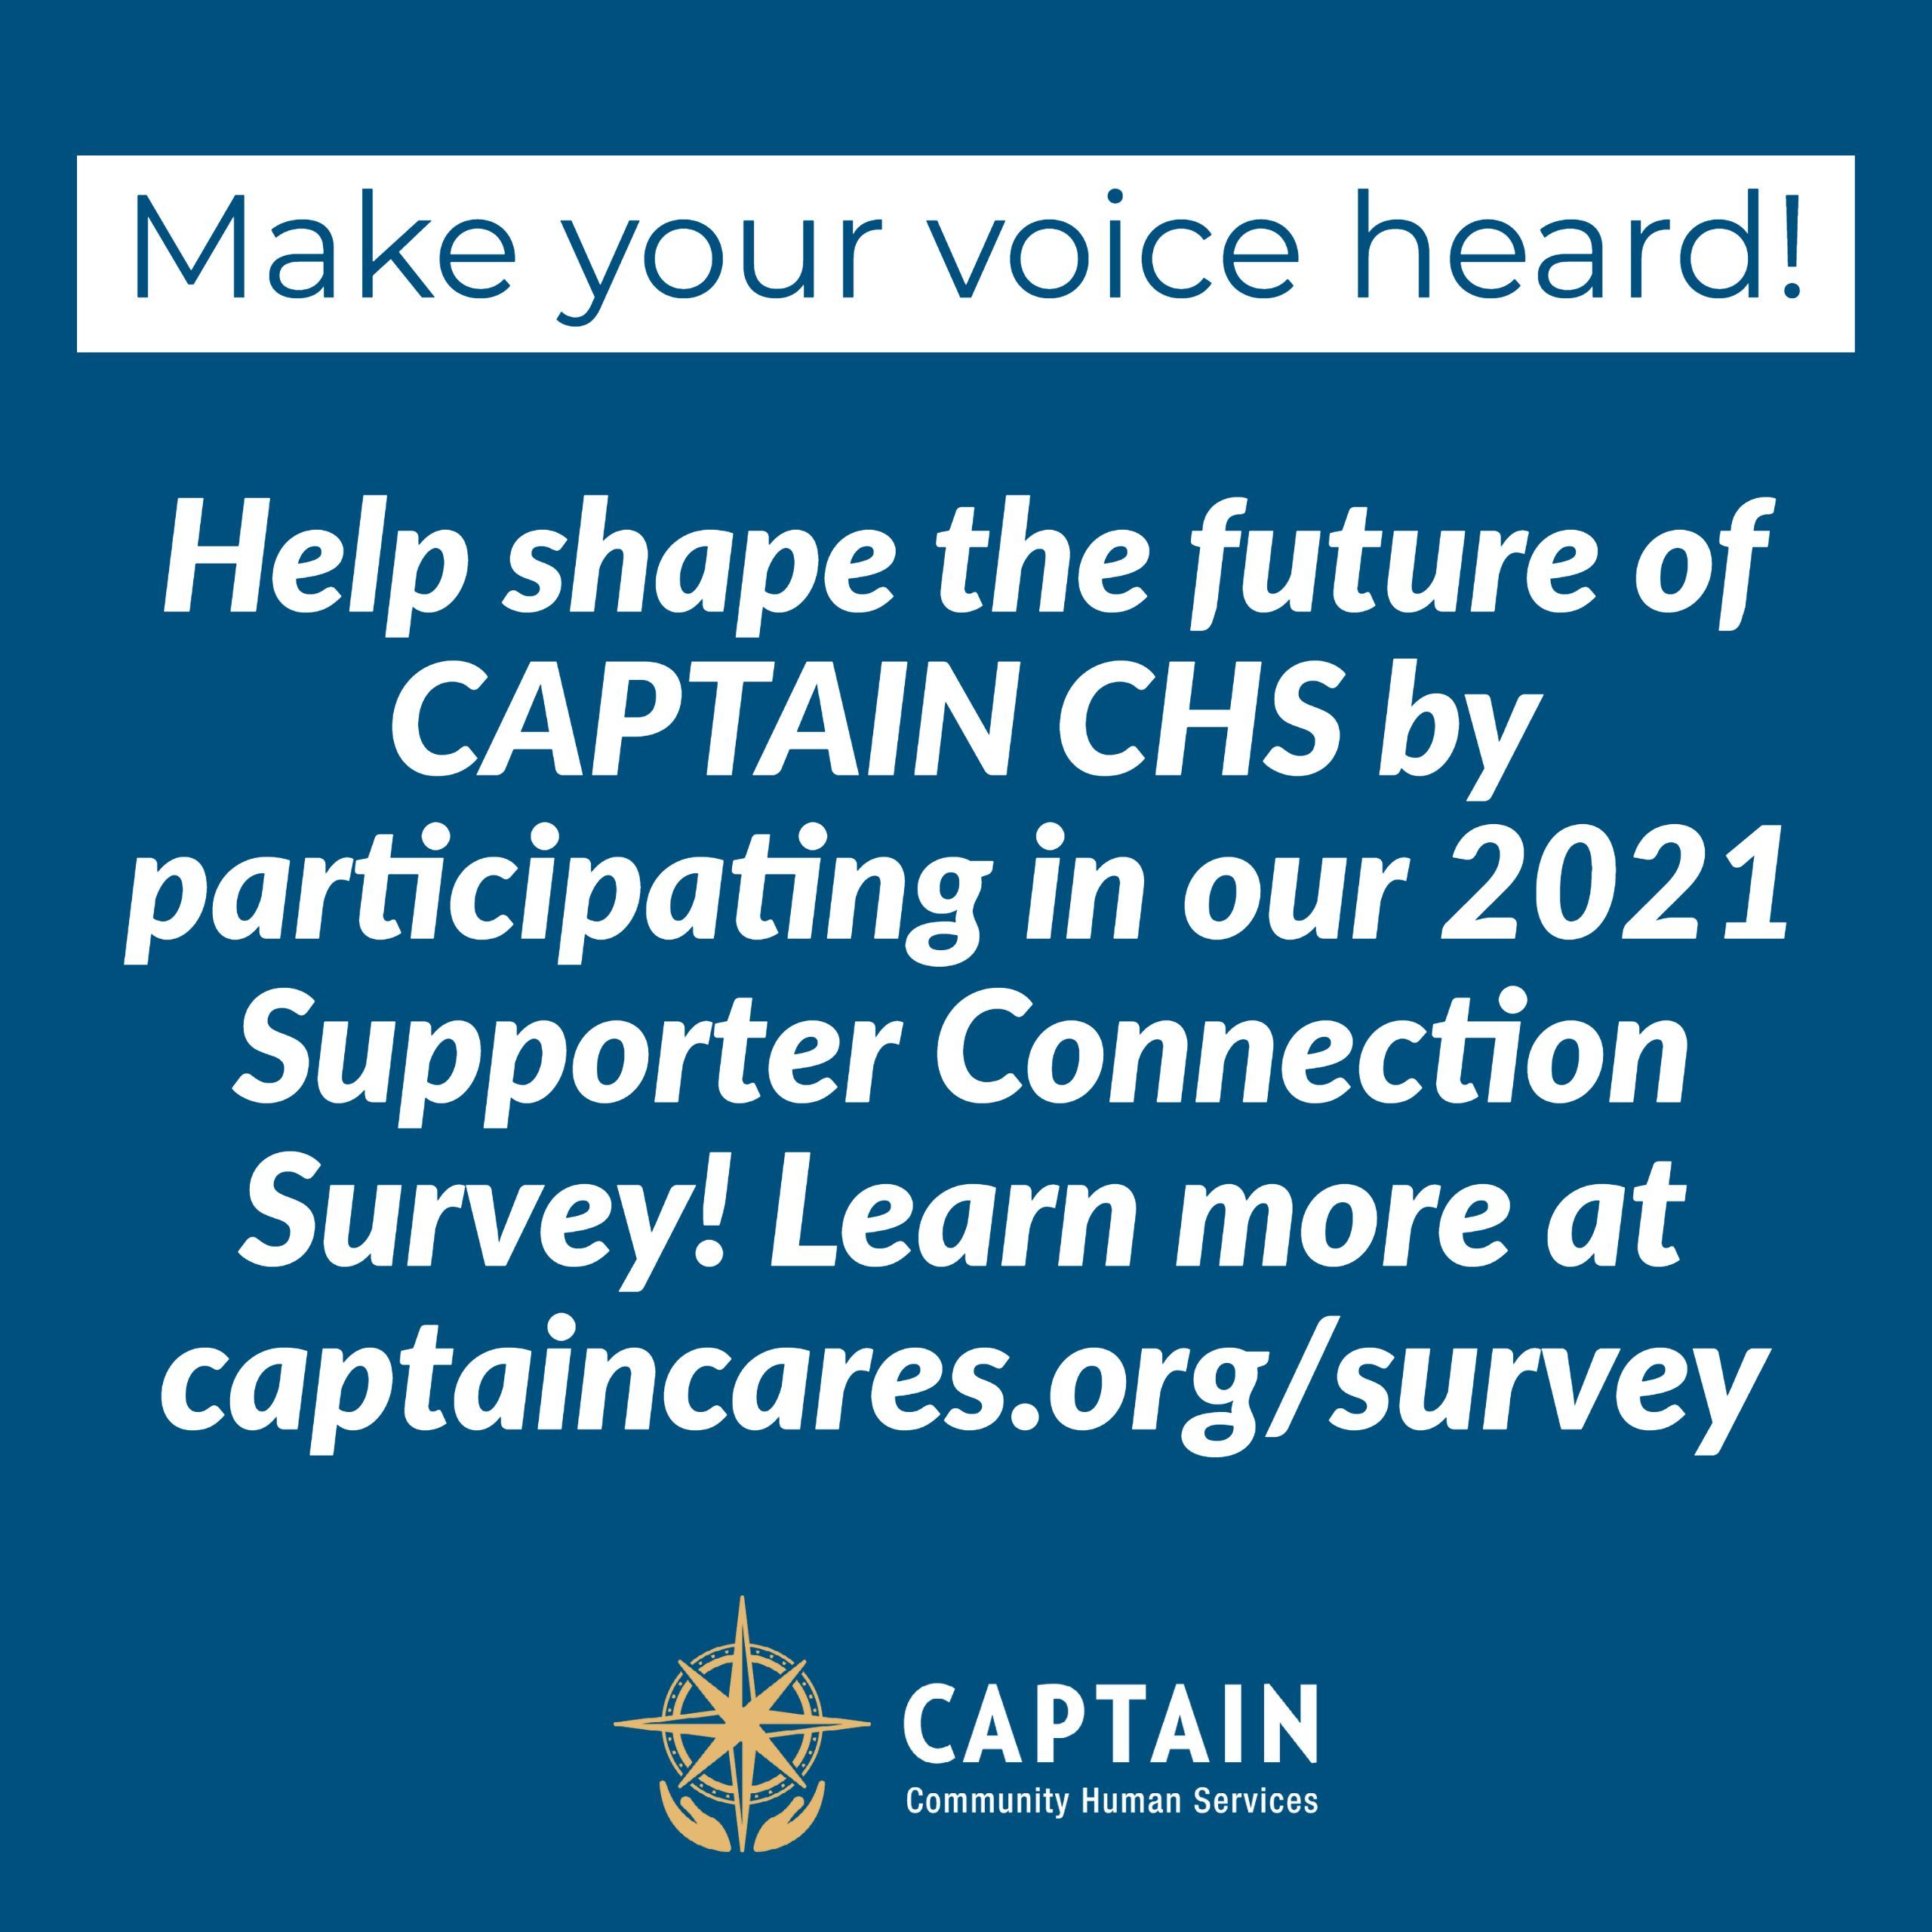 Help shape the future of CAPTAIN CHS!